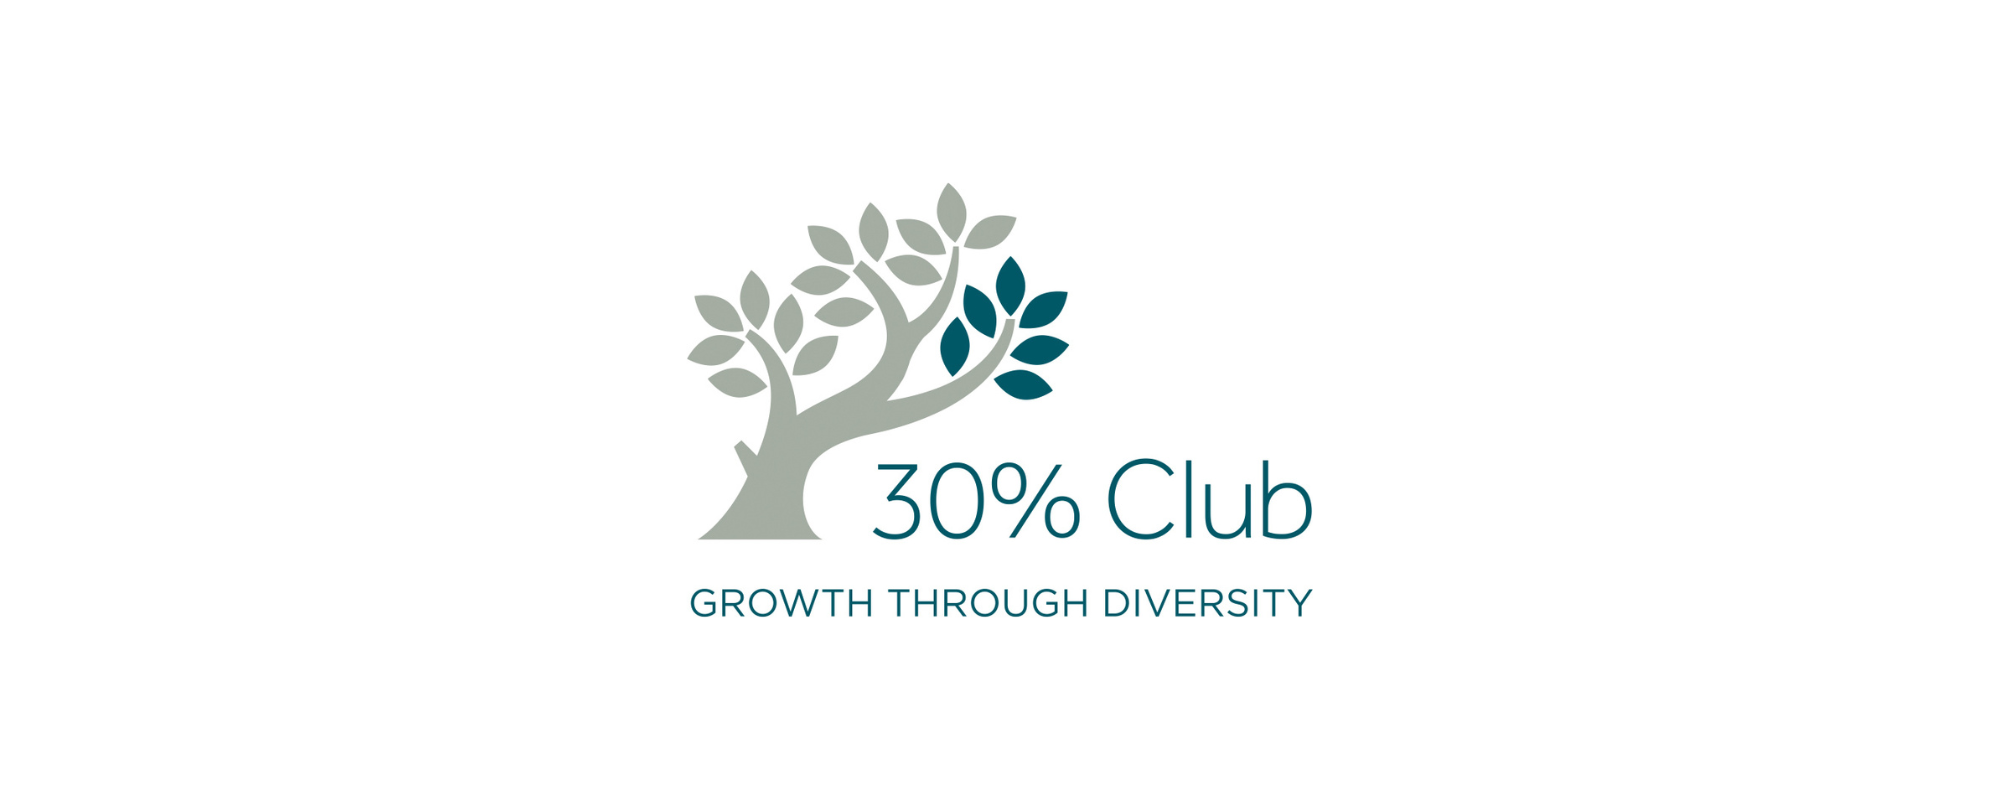 30% club